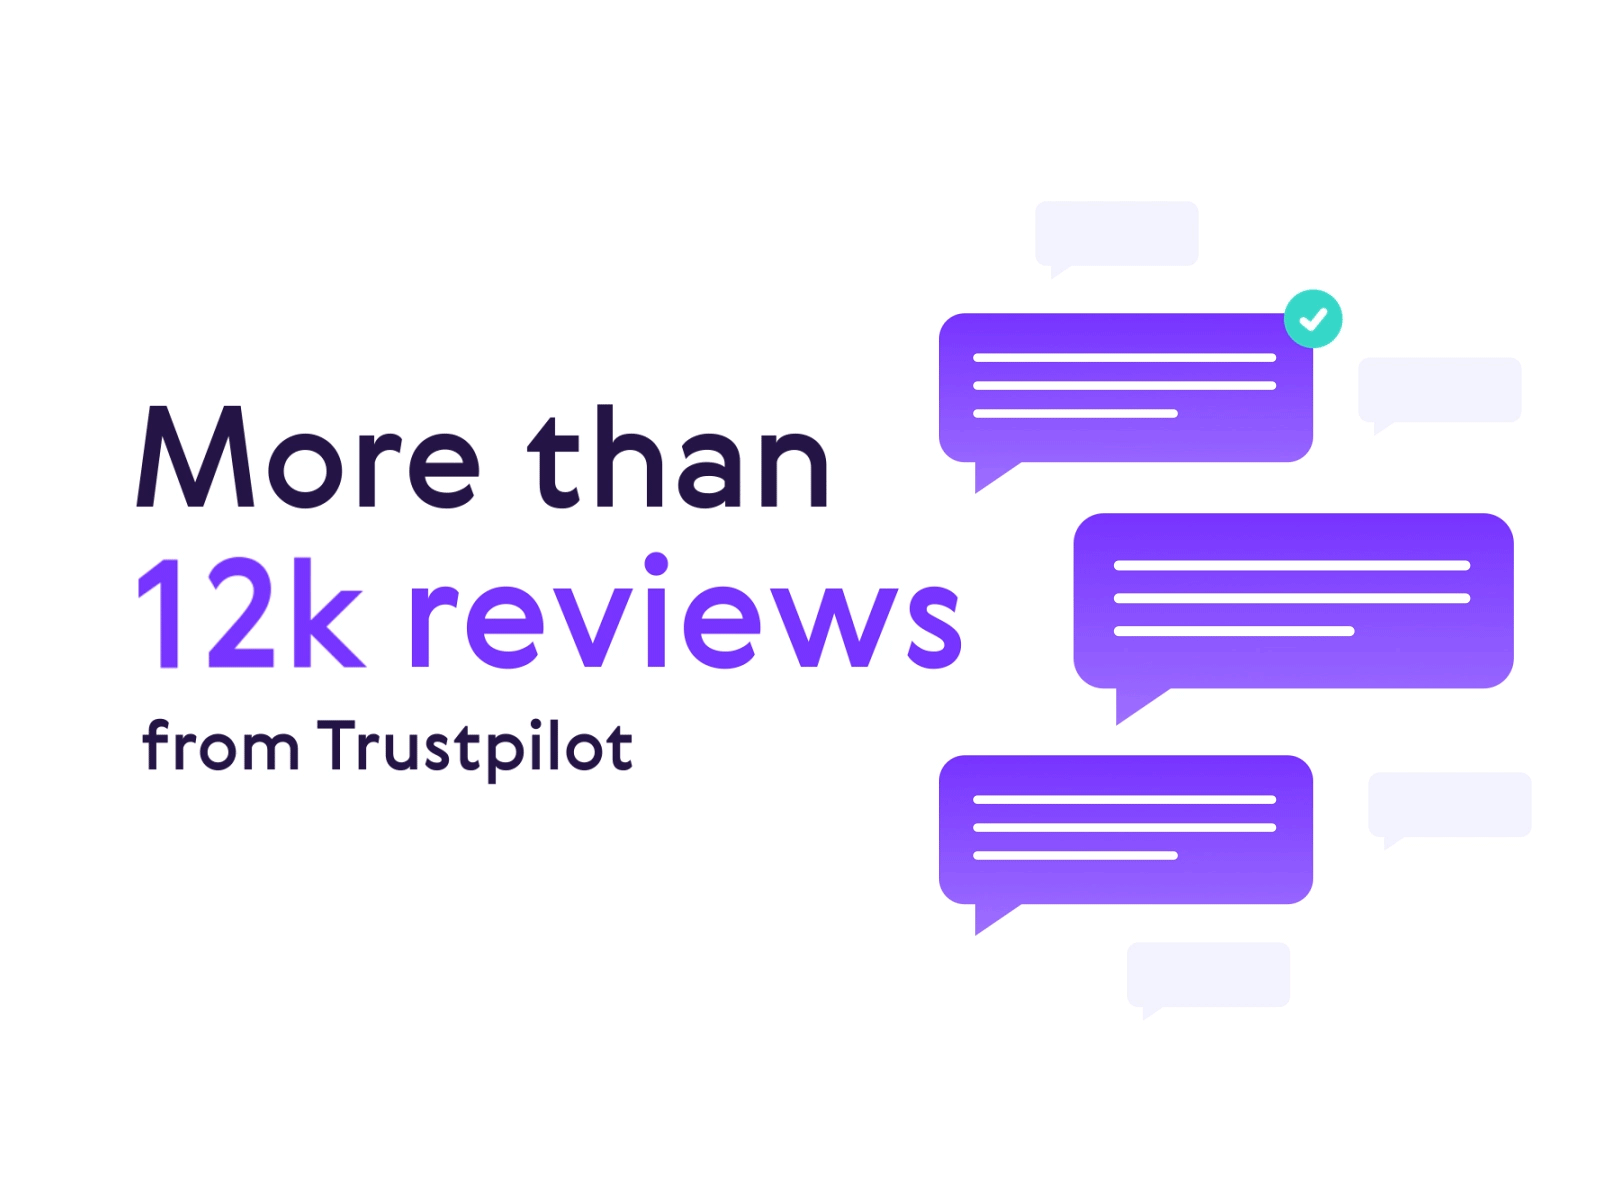 More than 1️⃣2️⃣ thousand reviews!